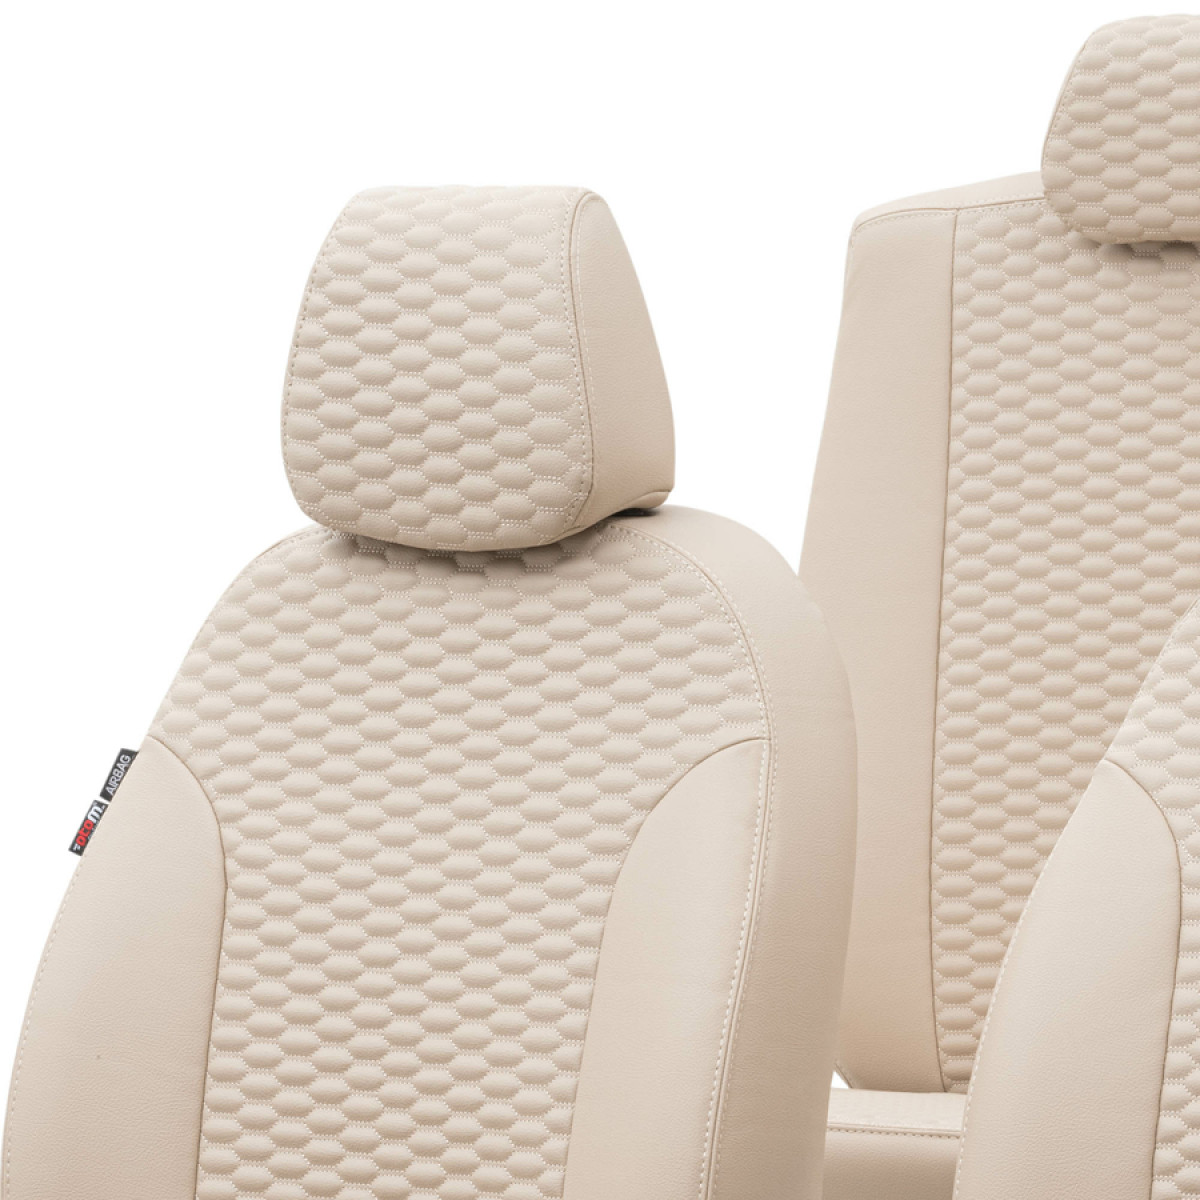 ItZza Auto Leder Sitzbezügesets für Mercedes Benz AMG E Class Klasse E200  E200d E220d Full Surround Custom Sitzkissen Sitzbezüge Auflagen Seat Cover  Sets Zubehör,Redstyle : : Auto & Motorrad